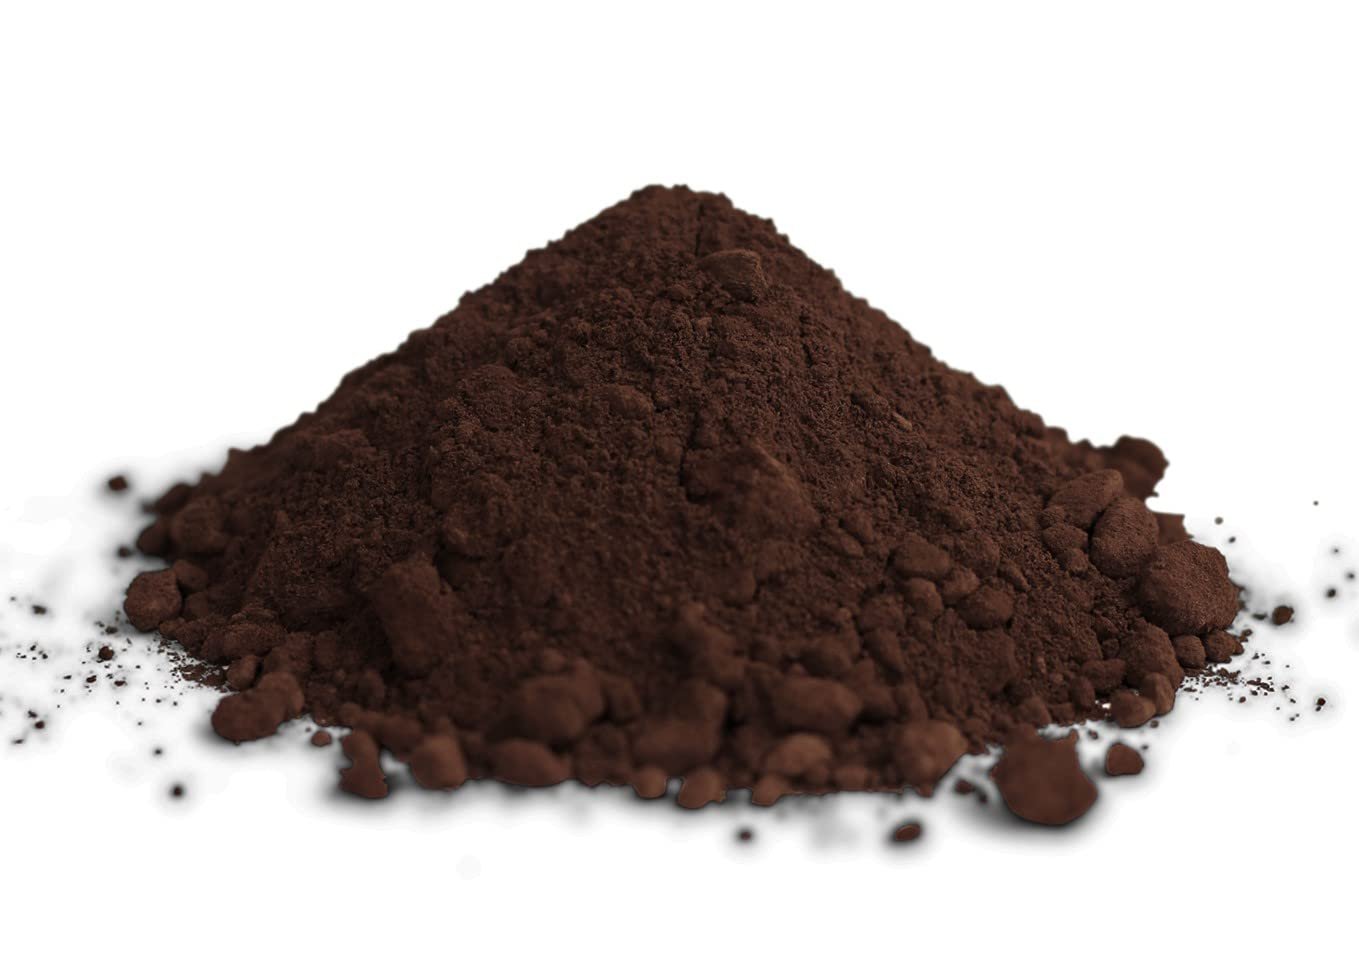 Organic Black Cocoa Powder by Its Delish 25 oz (1.56 lbs) Jumbo Container Premium Chocolatier Grade Dutch 12% Fat Dark Cocoa Powder for Baking